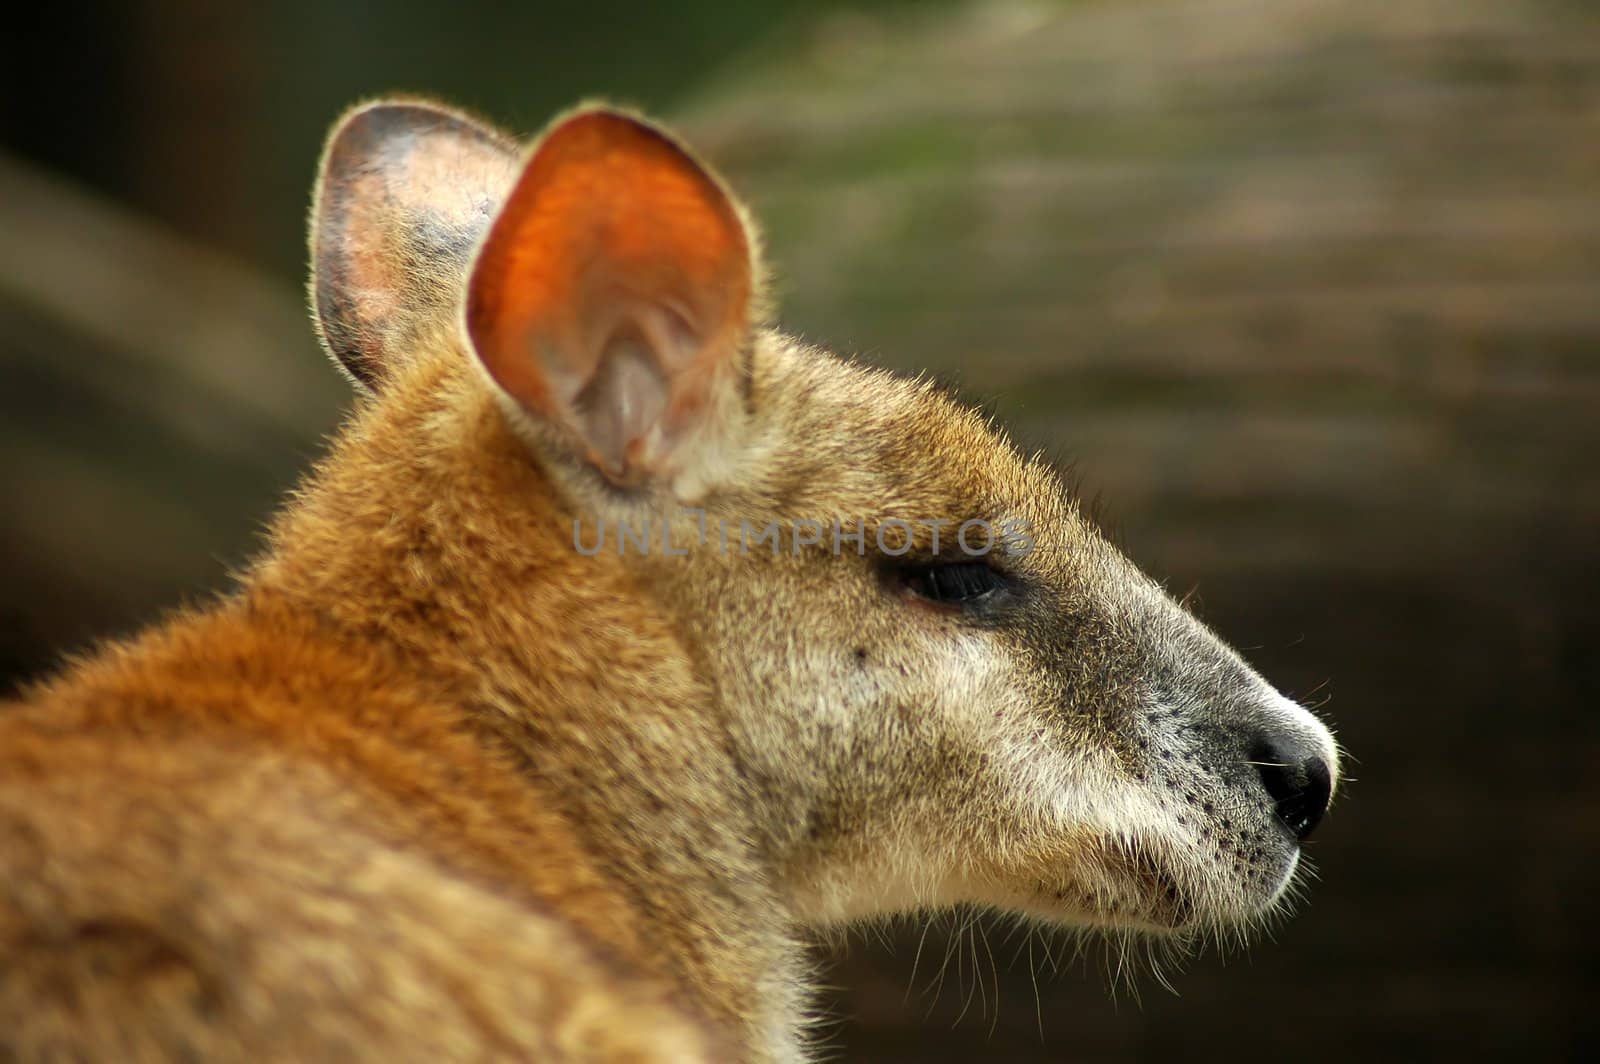 brown kangaroo head detail, blurred background